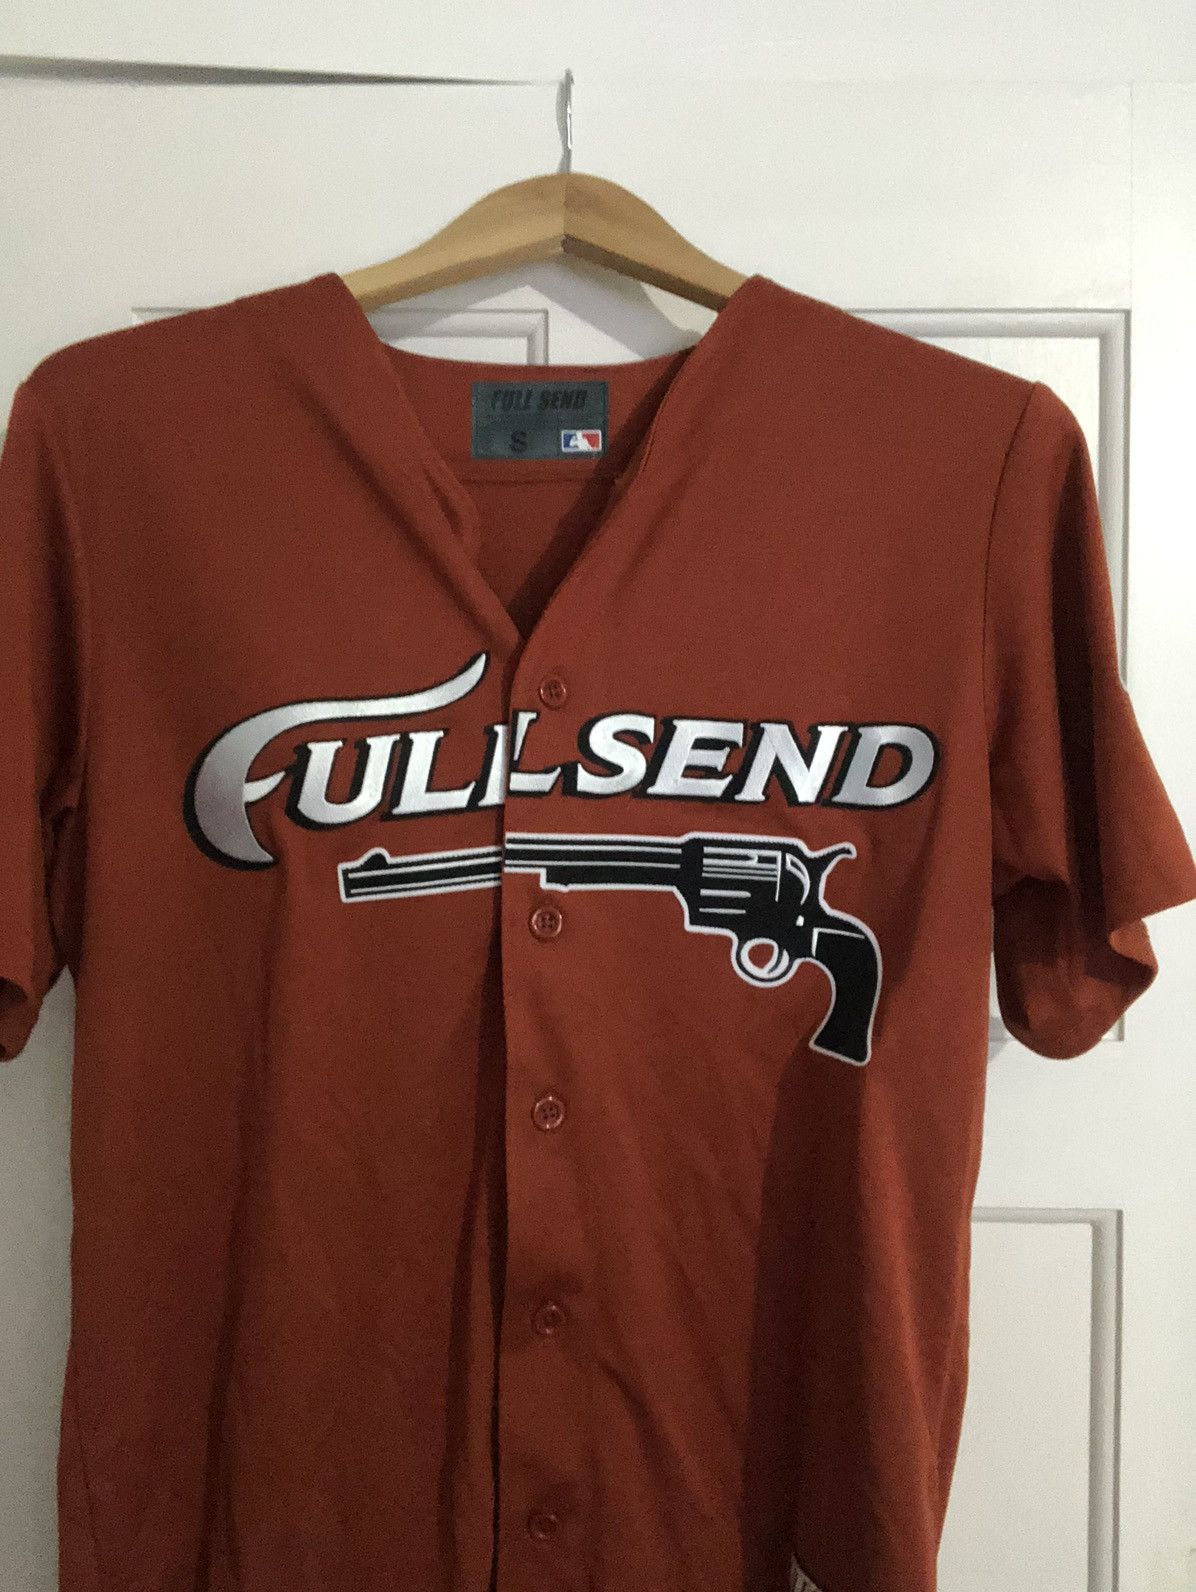 Brand New Full Send Baseball Jersey Size Large.